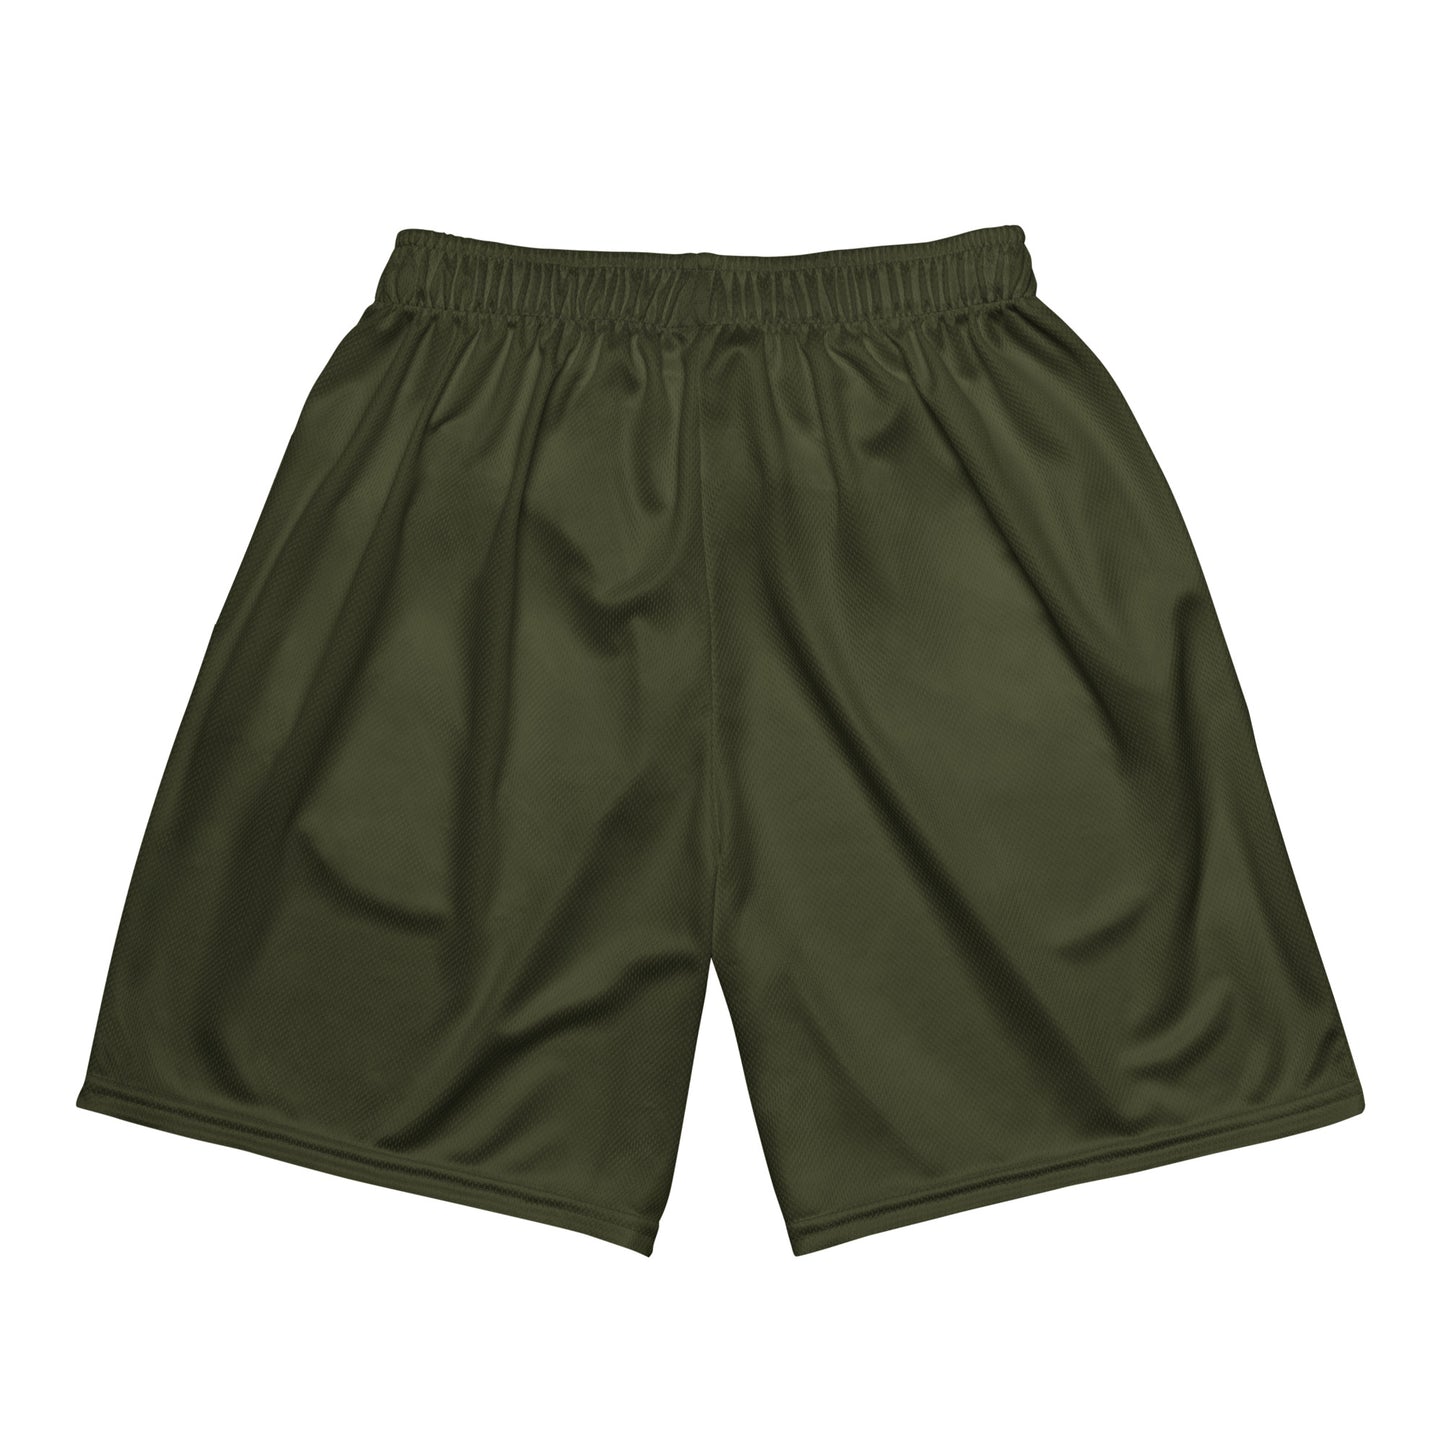 Unisex Cypress mesh shorts